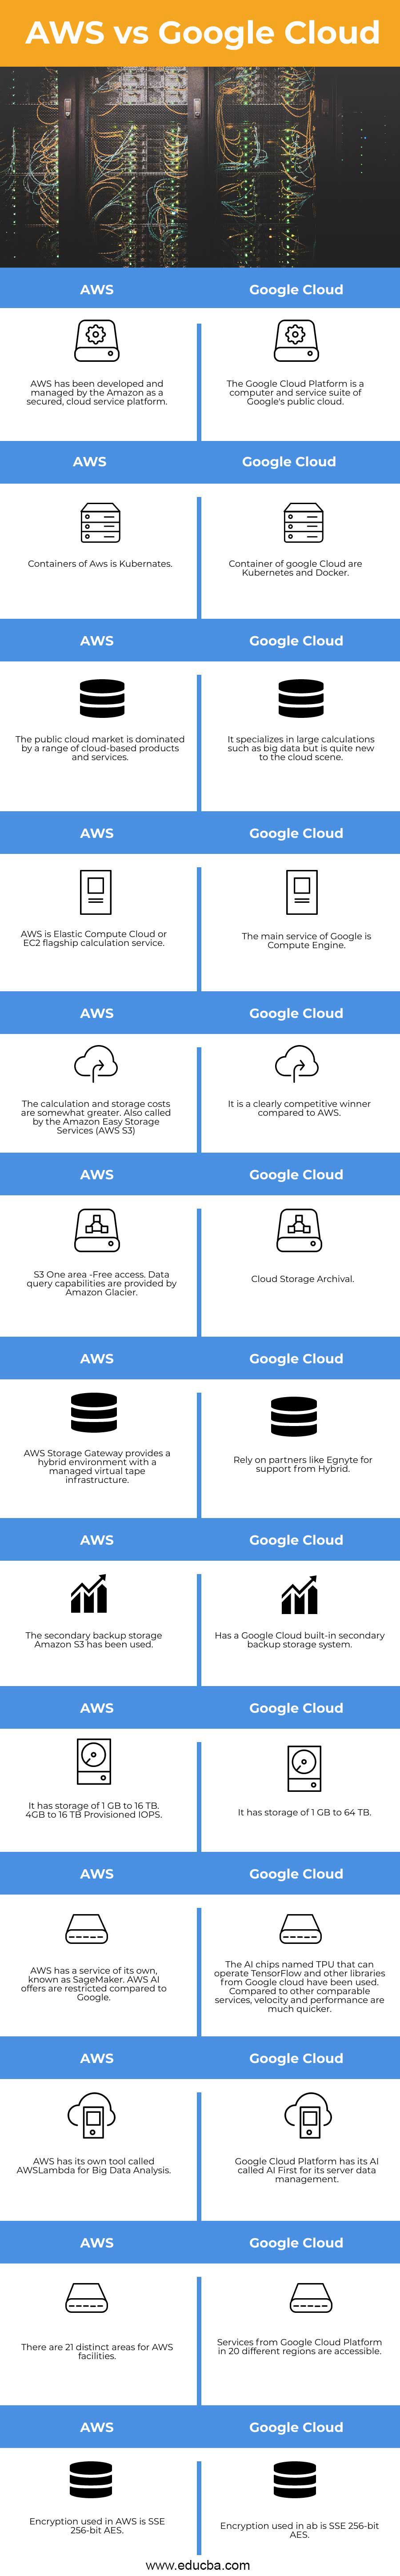 AWS-vs-Google-Cloud-info